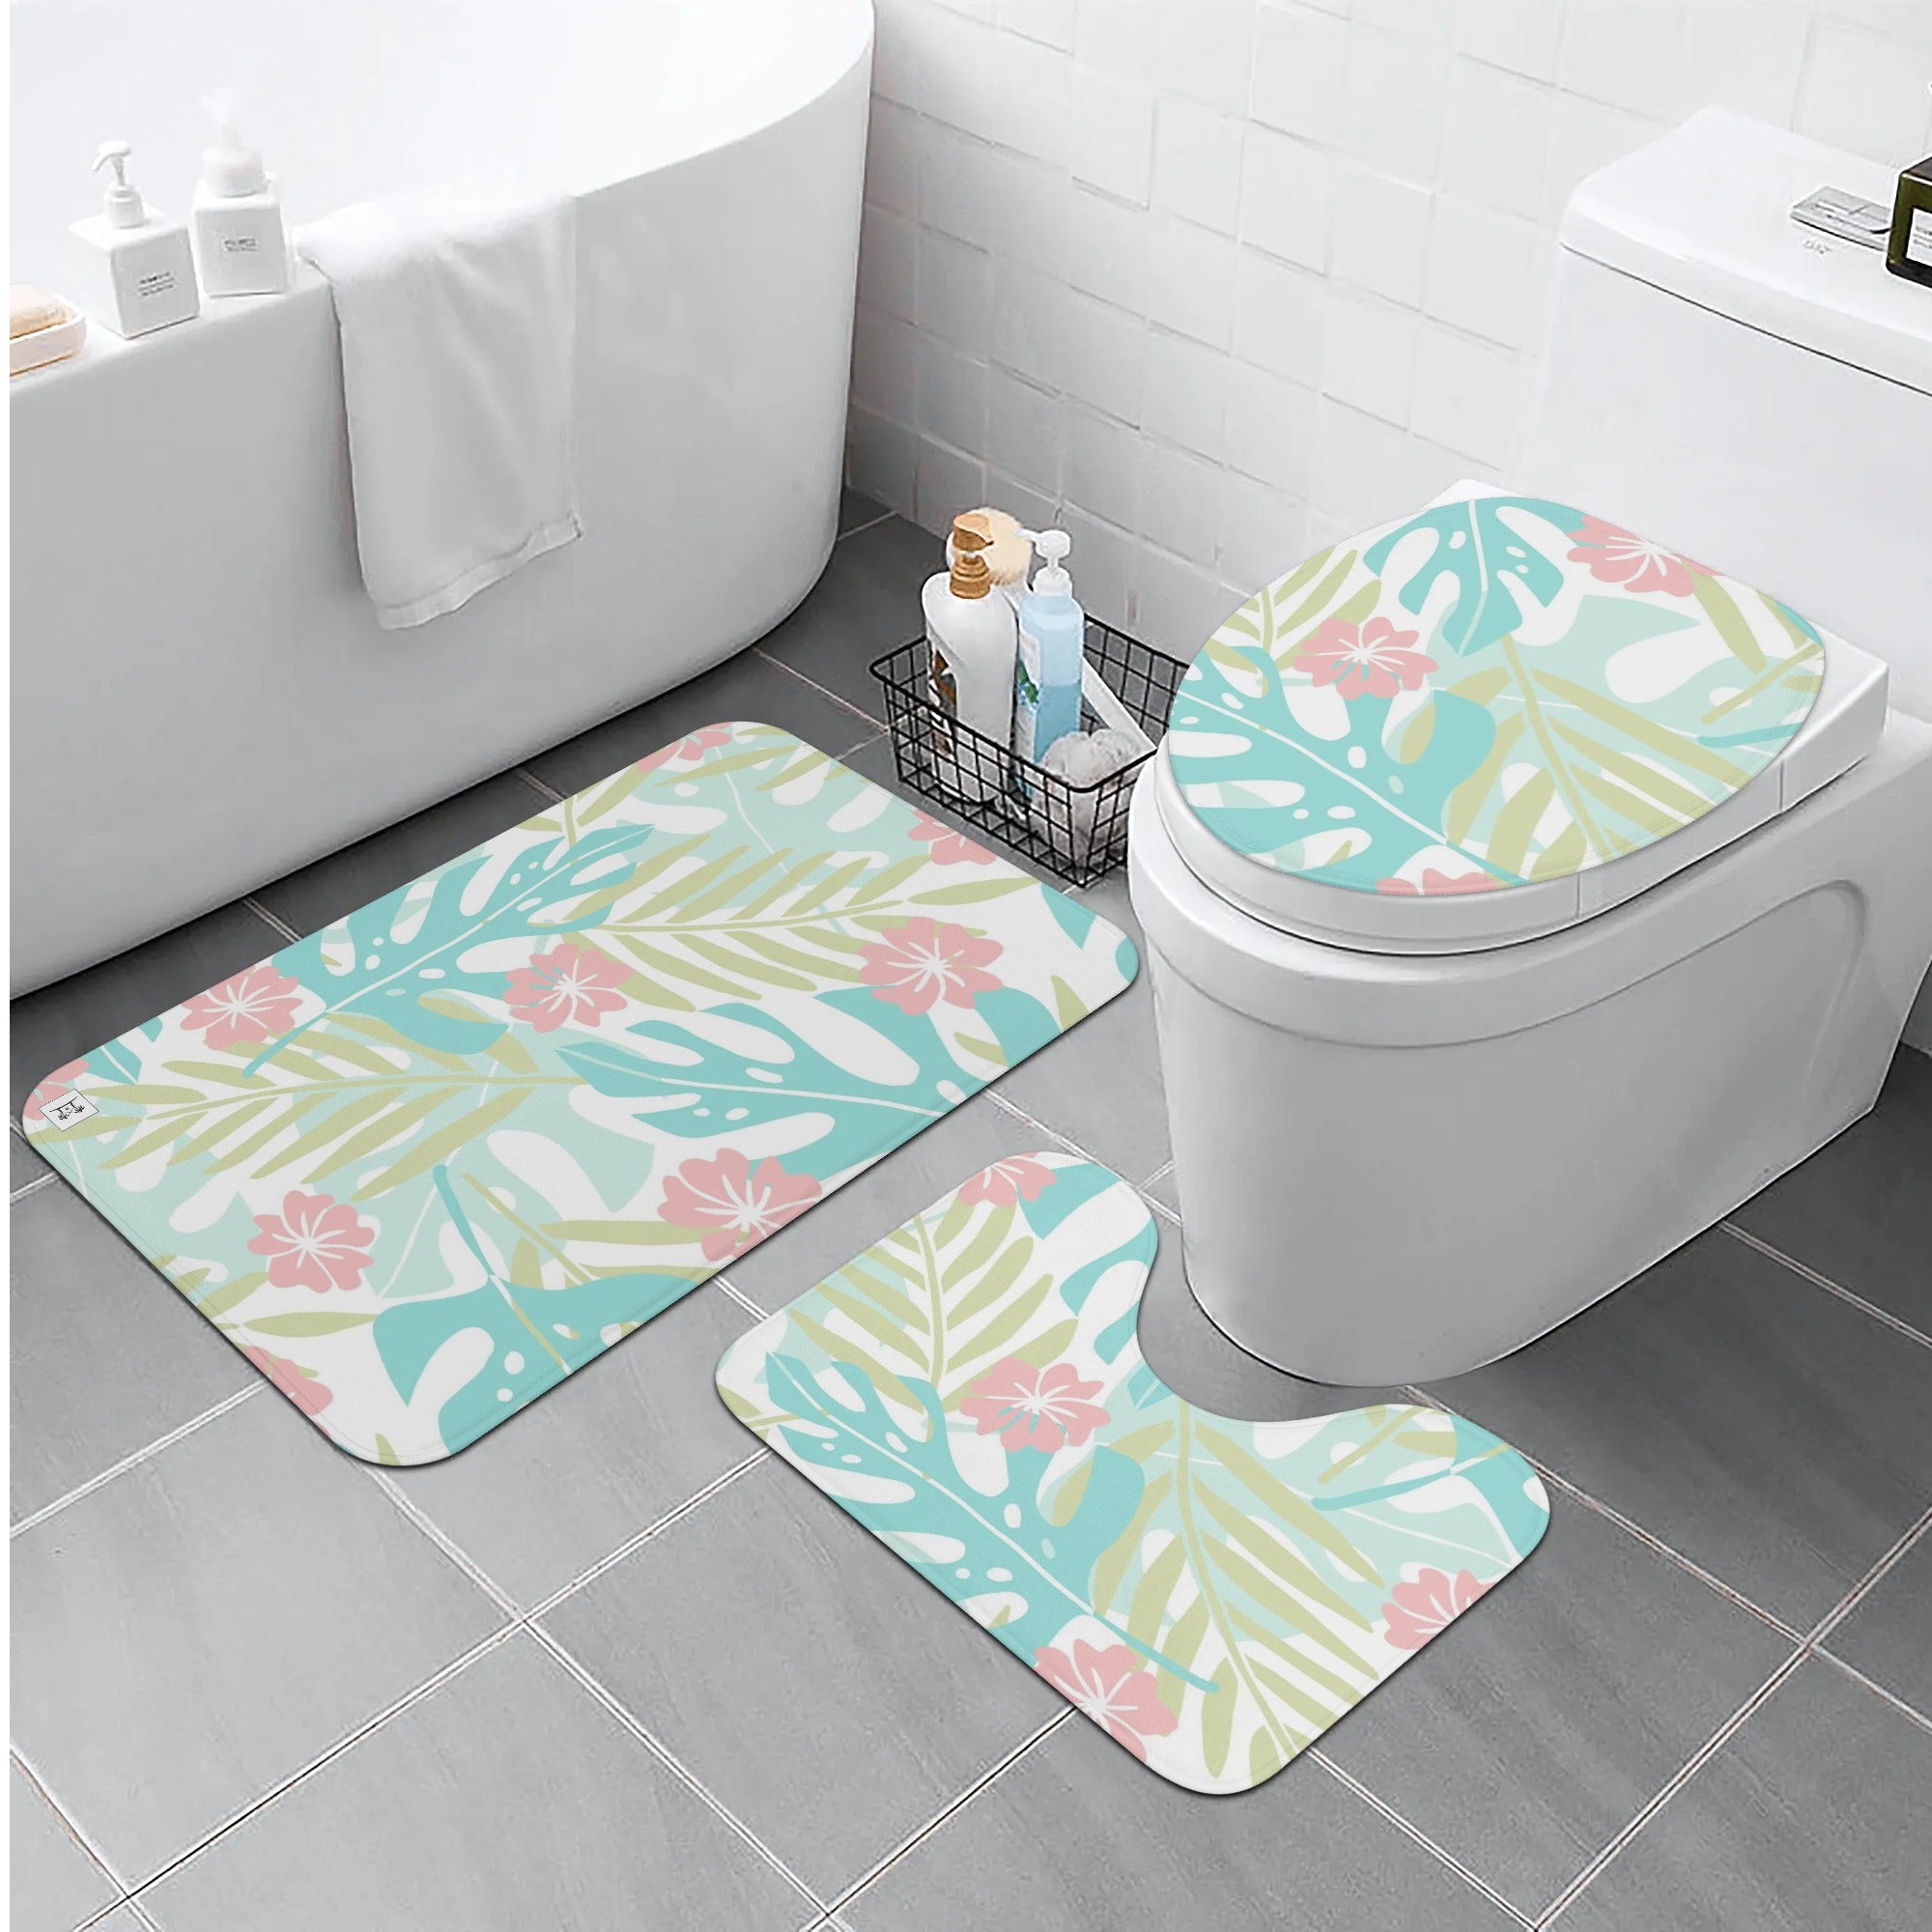 Three-Piece Bath Mat Set - Tropical Print in Pastels